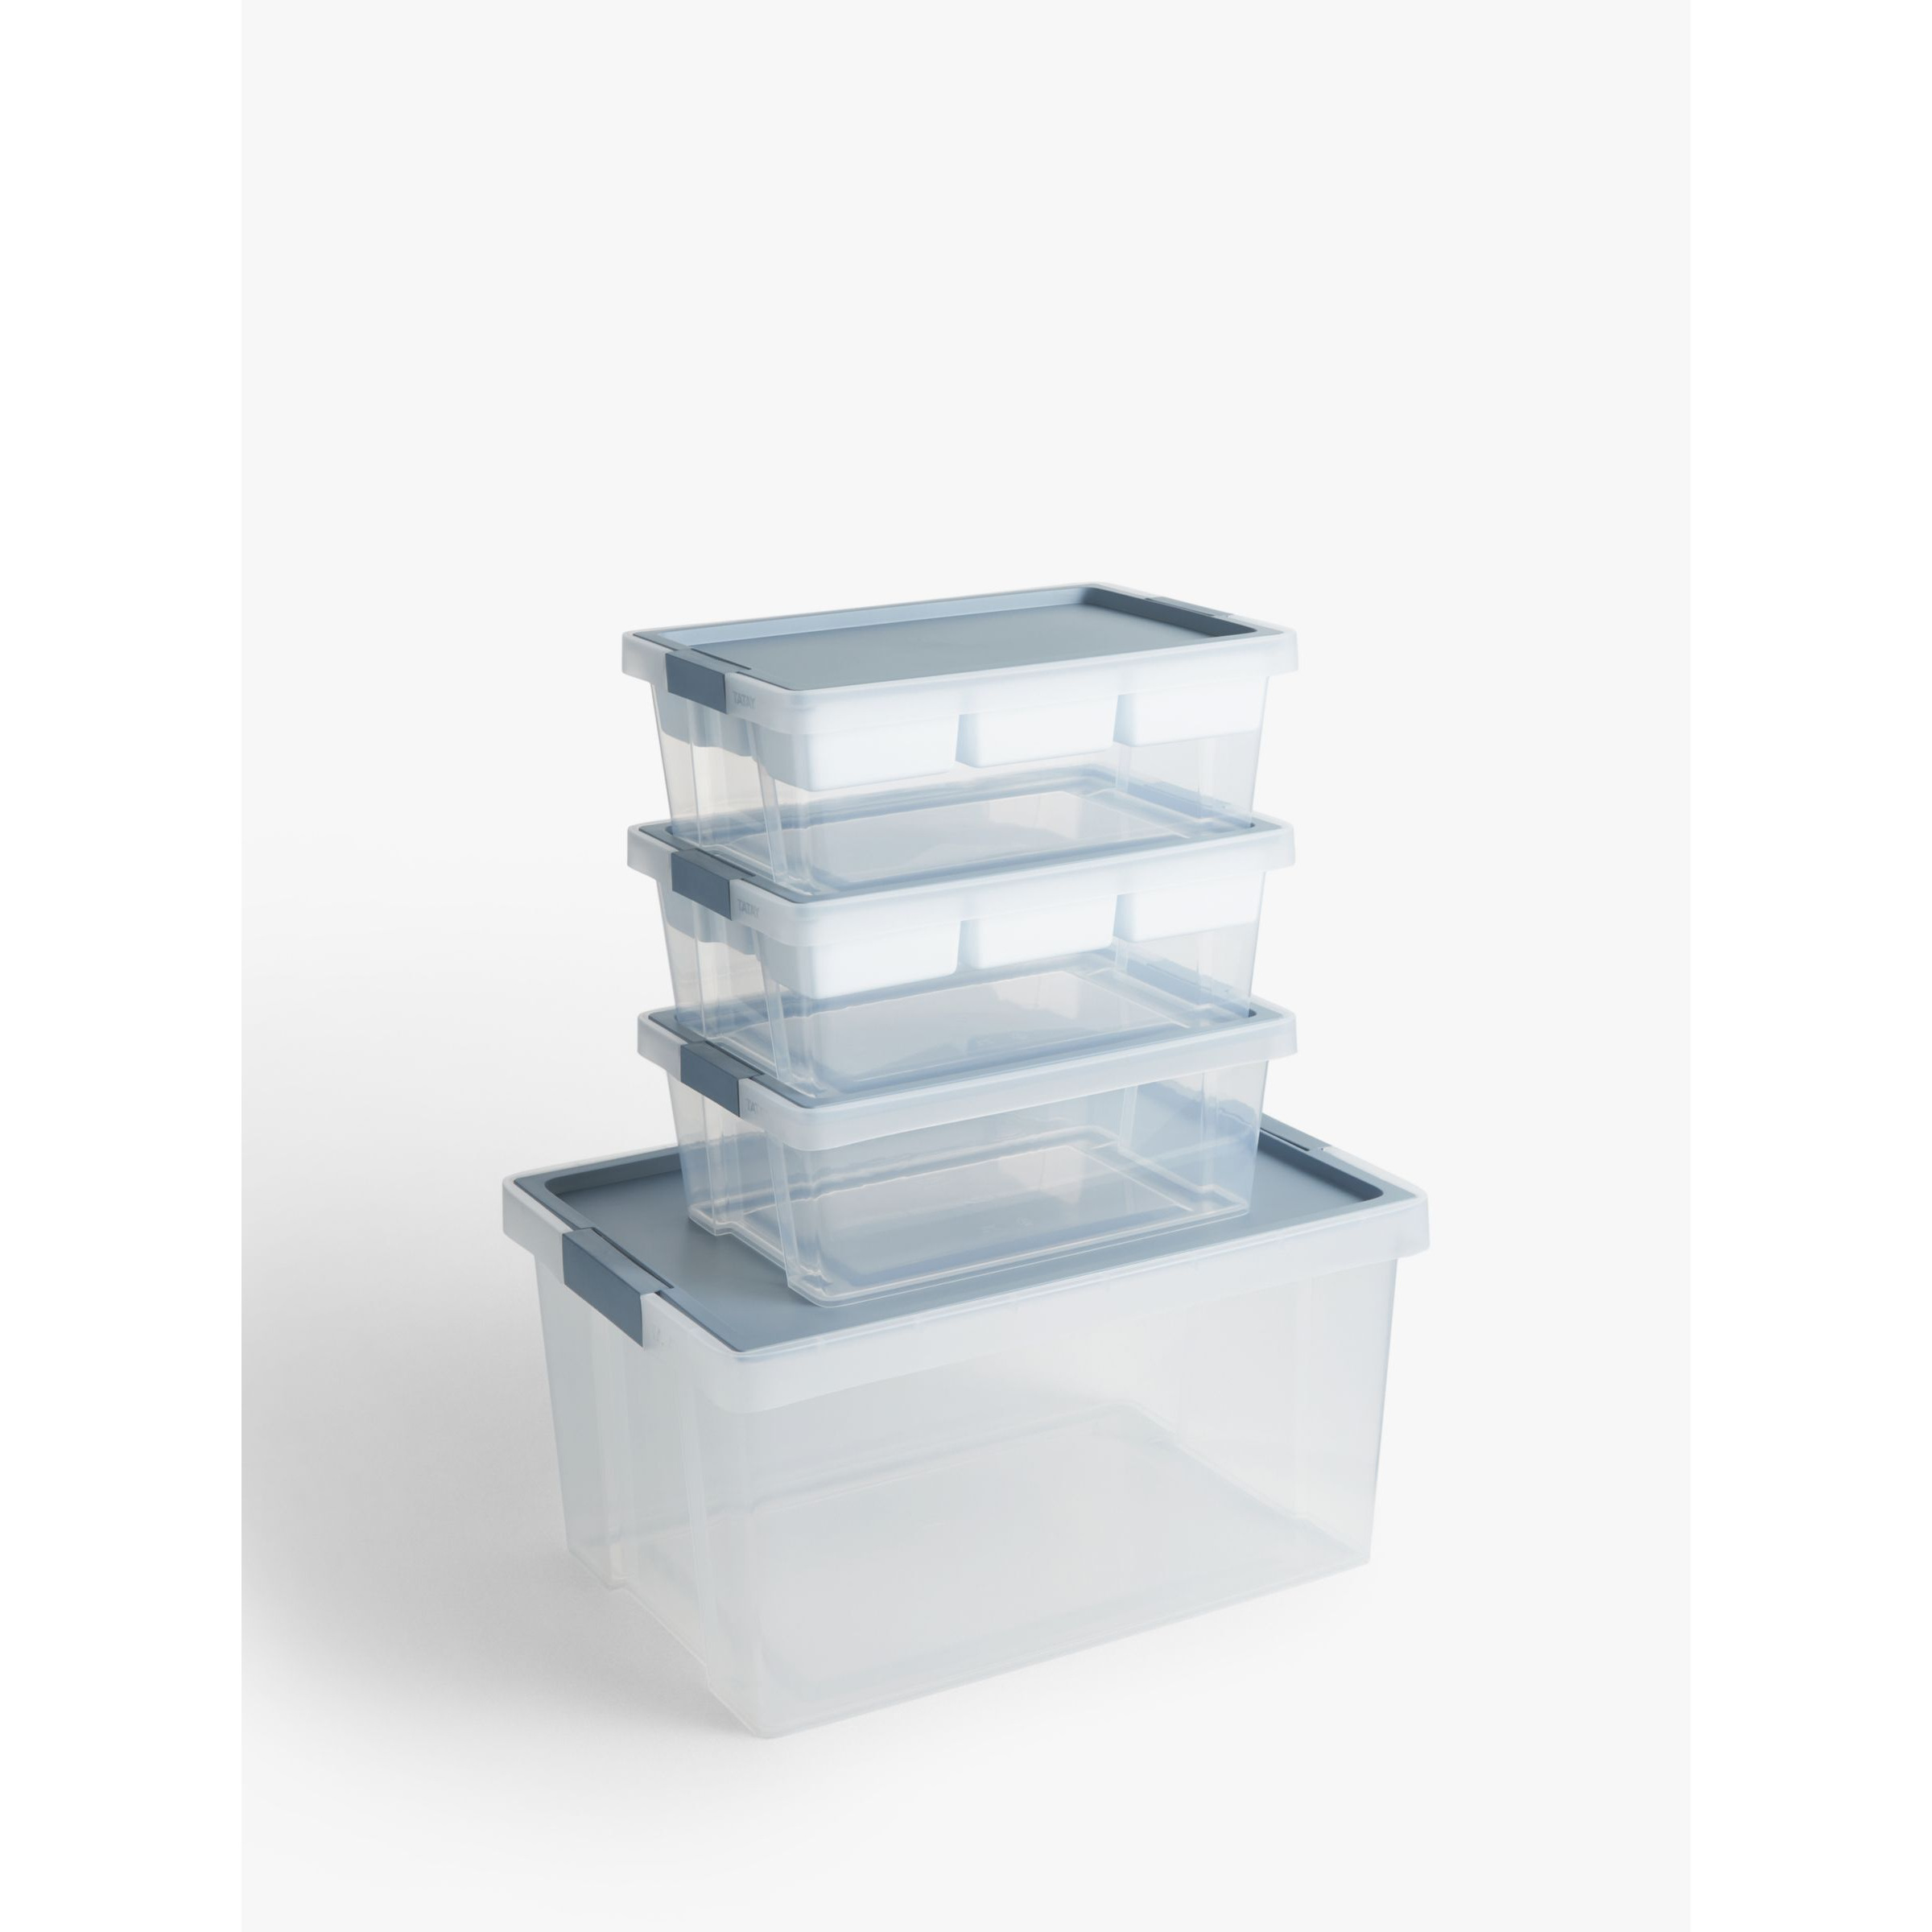 TATAY Hinge Lid Storage Boxes and Organisers, Light Blue, Set of 6 - image 1